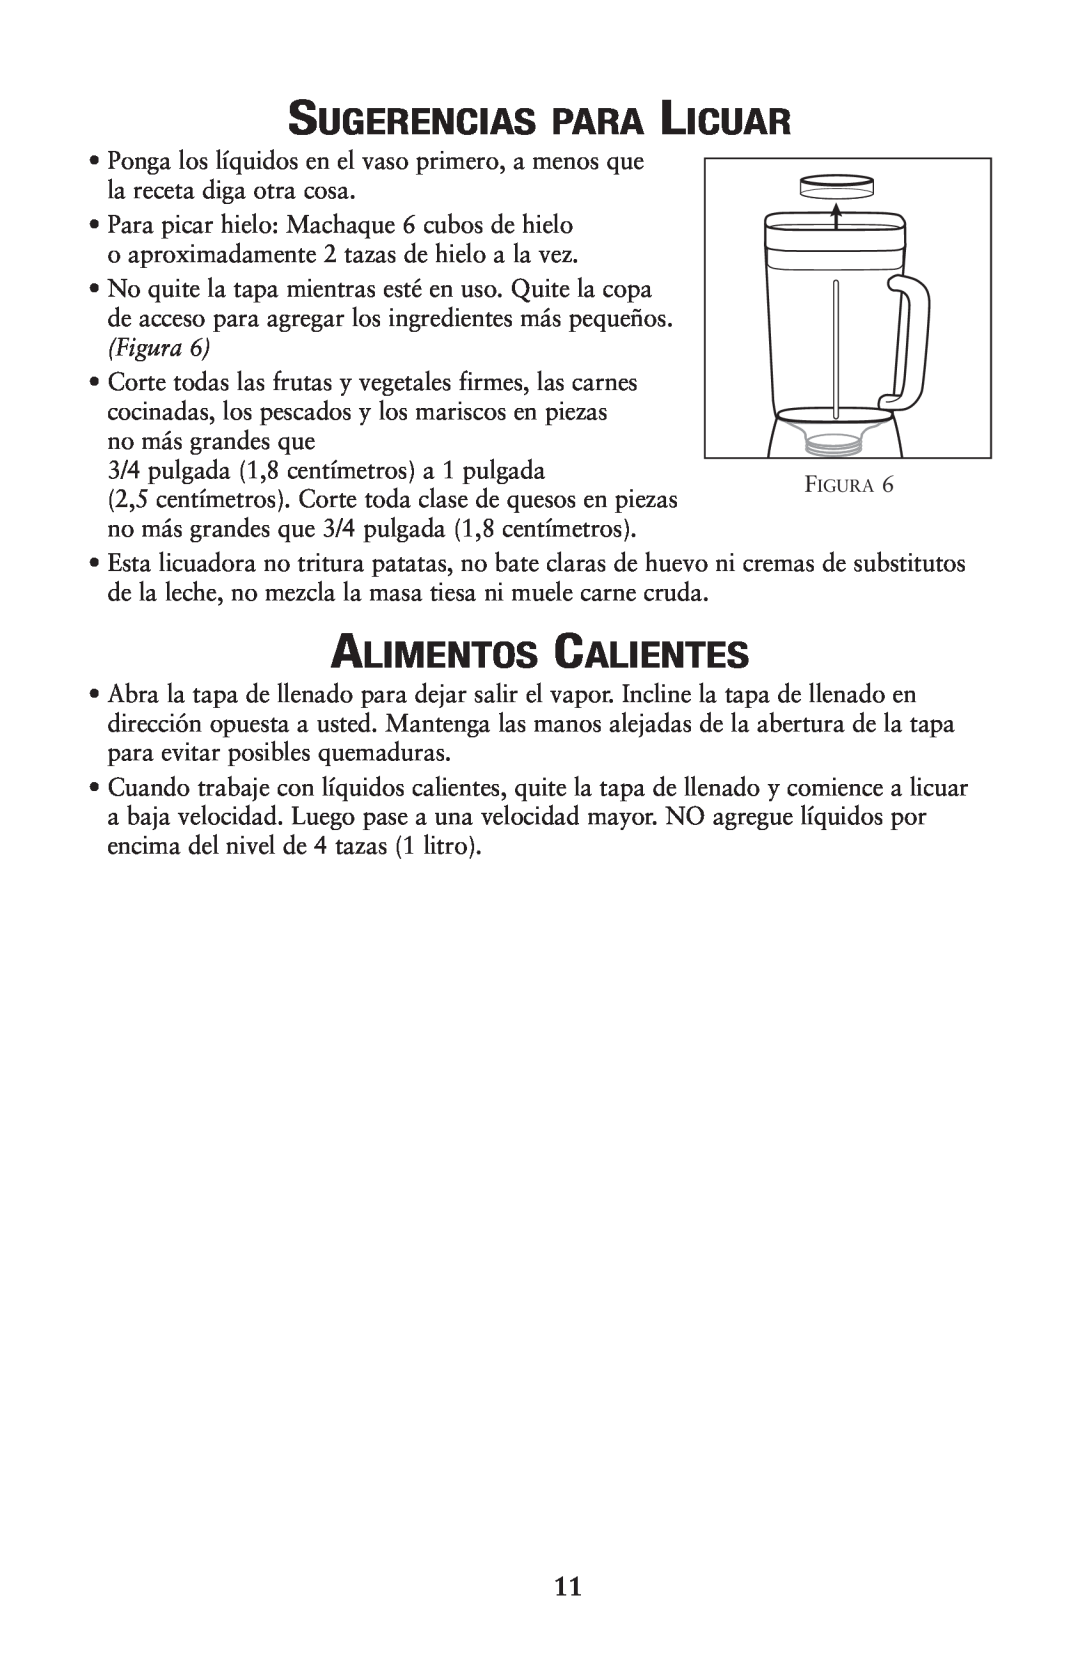 Oster P.N. 133086 user manual Sugerencias Para Licuar, Alimentos Calientes, Figura 